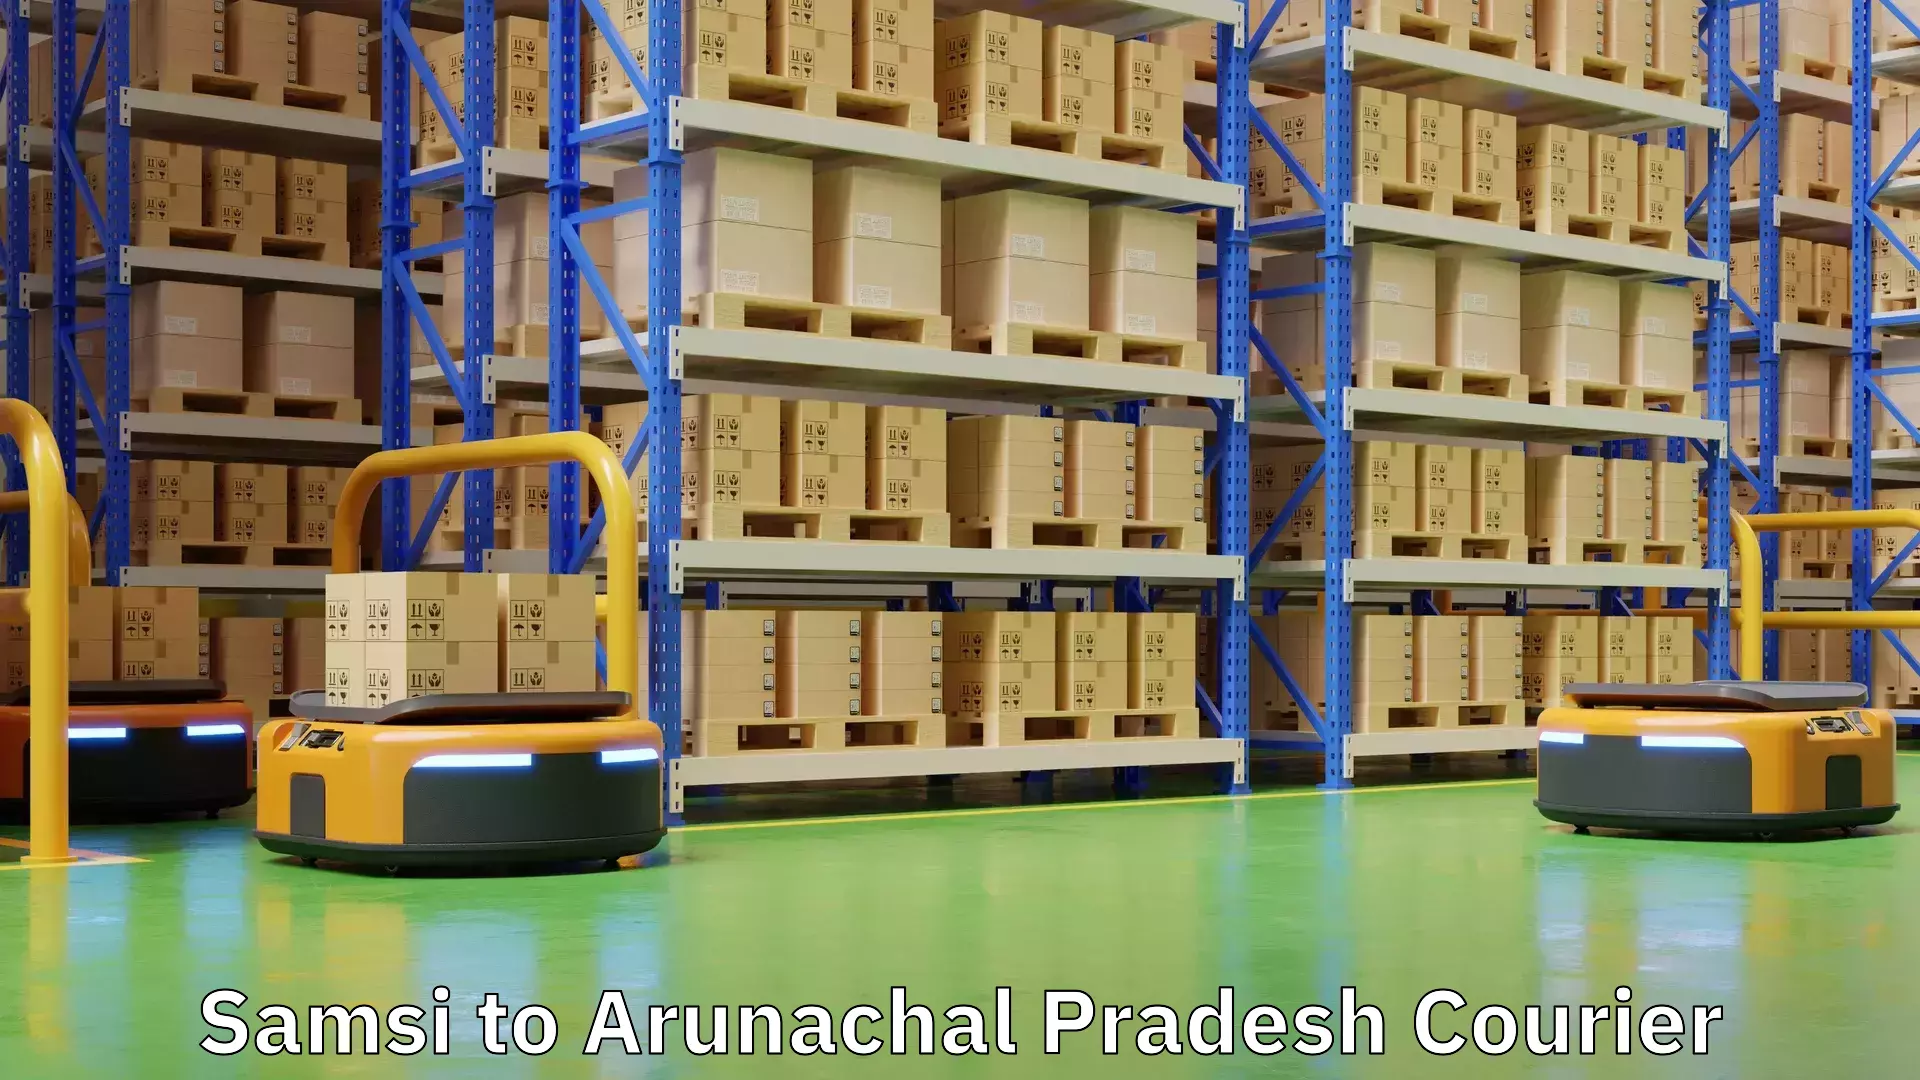 Professional courier handling Samsi to Arunachal Pradesh